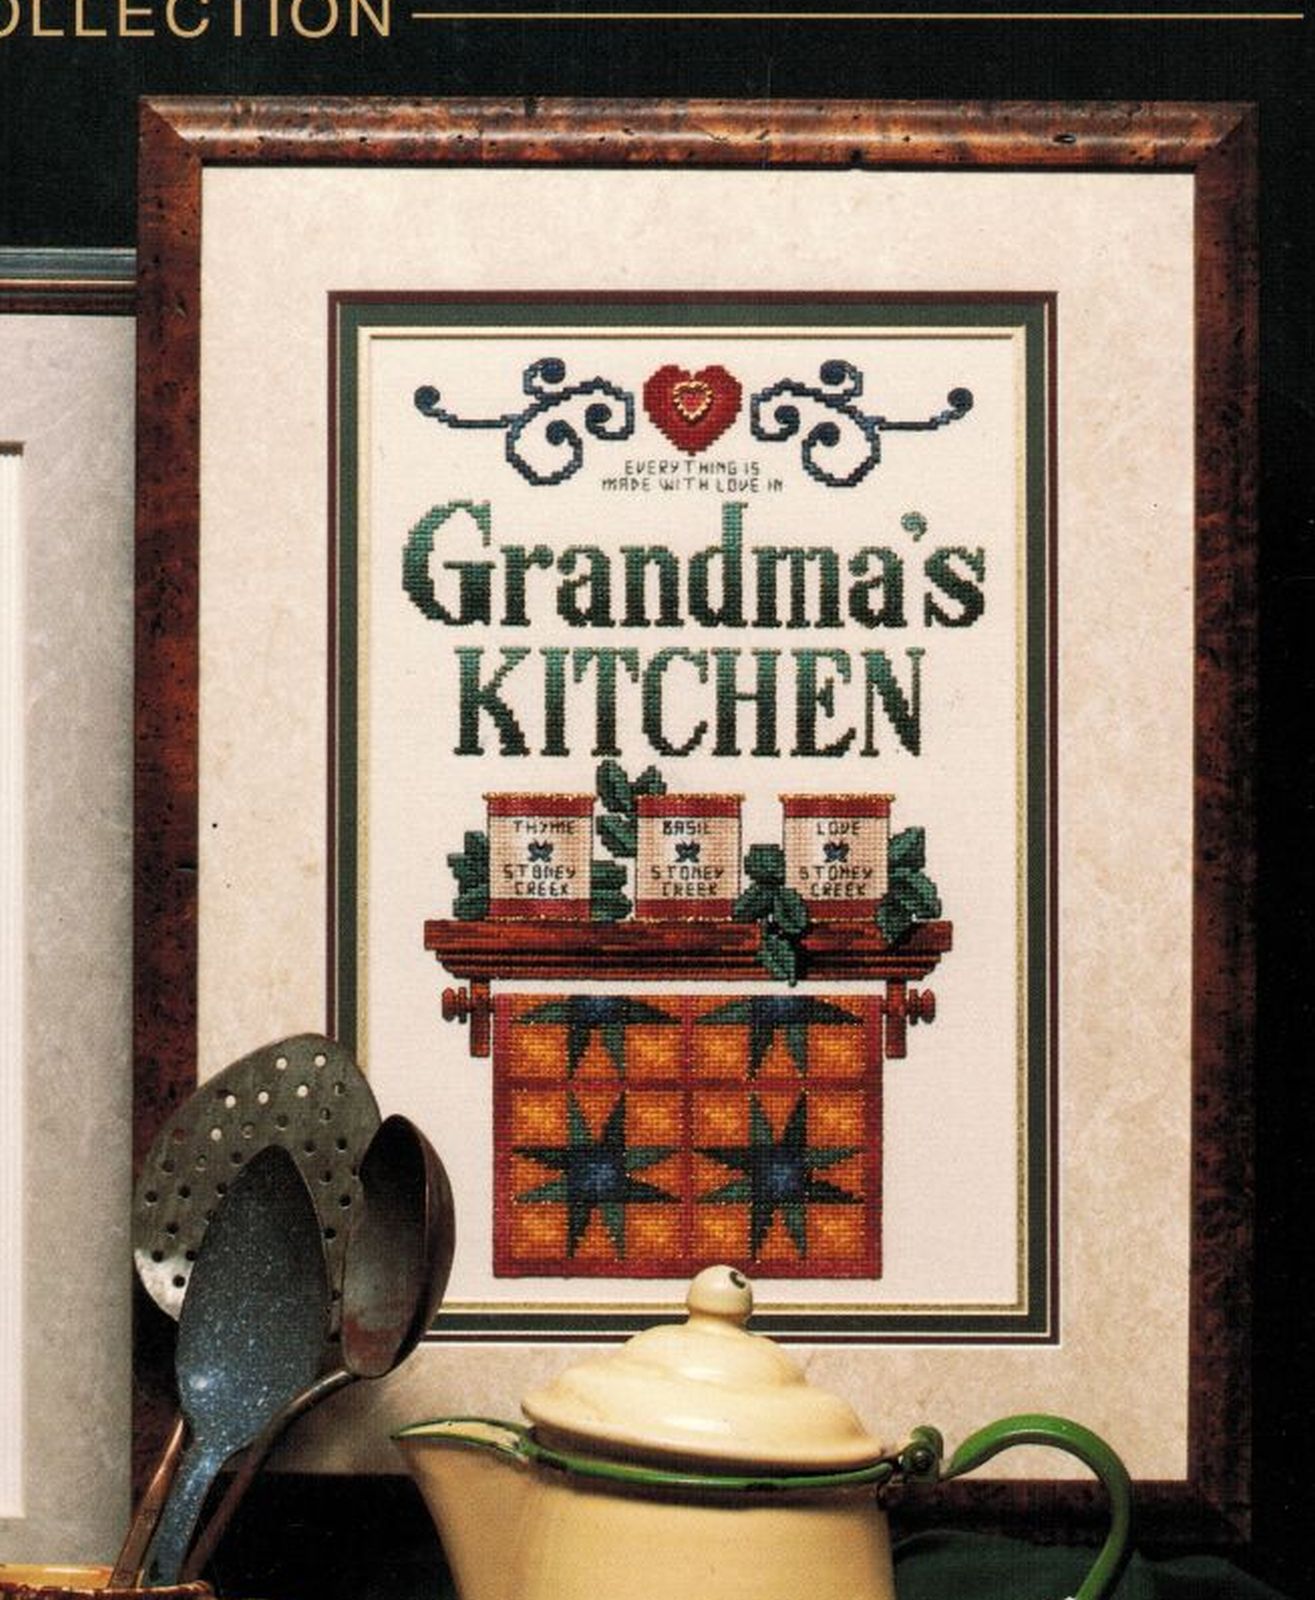 11 Cross Stitch Quilted Kitchen Creations Cats Bluebird Grandma Jar Lids Pattern - $12.99